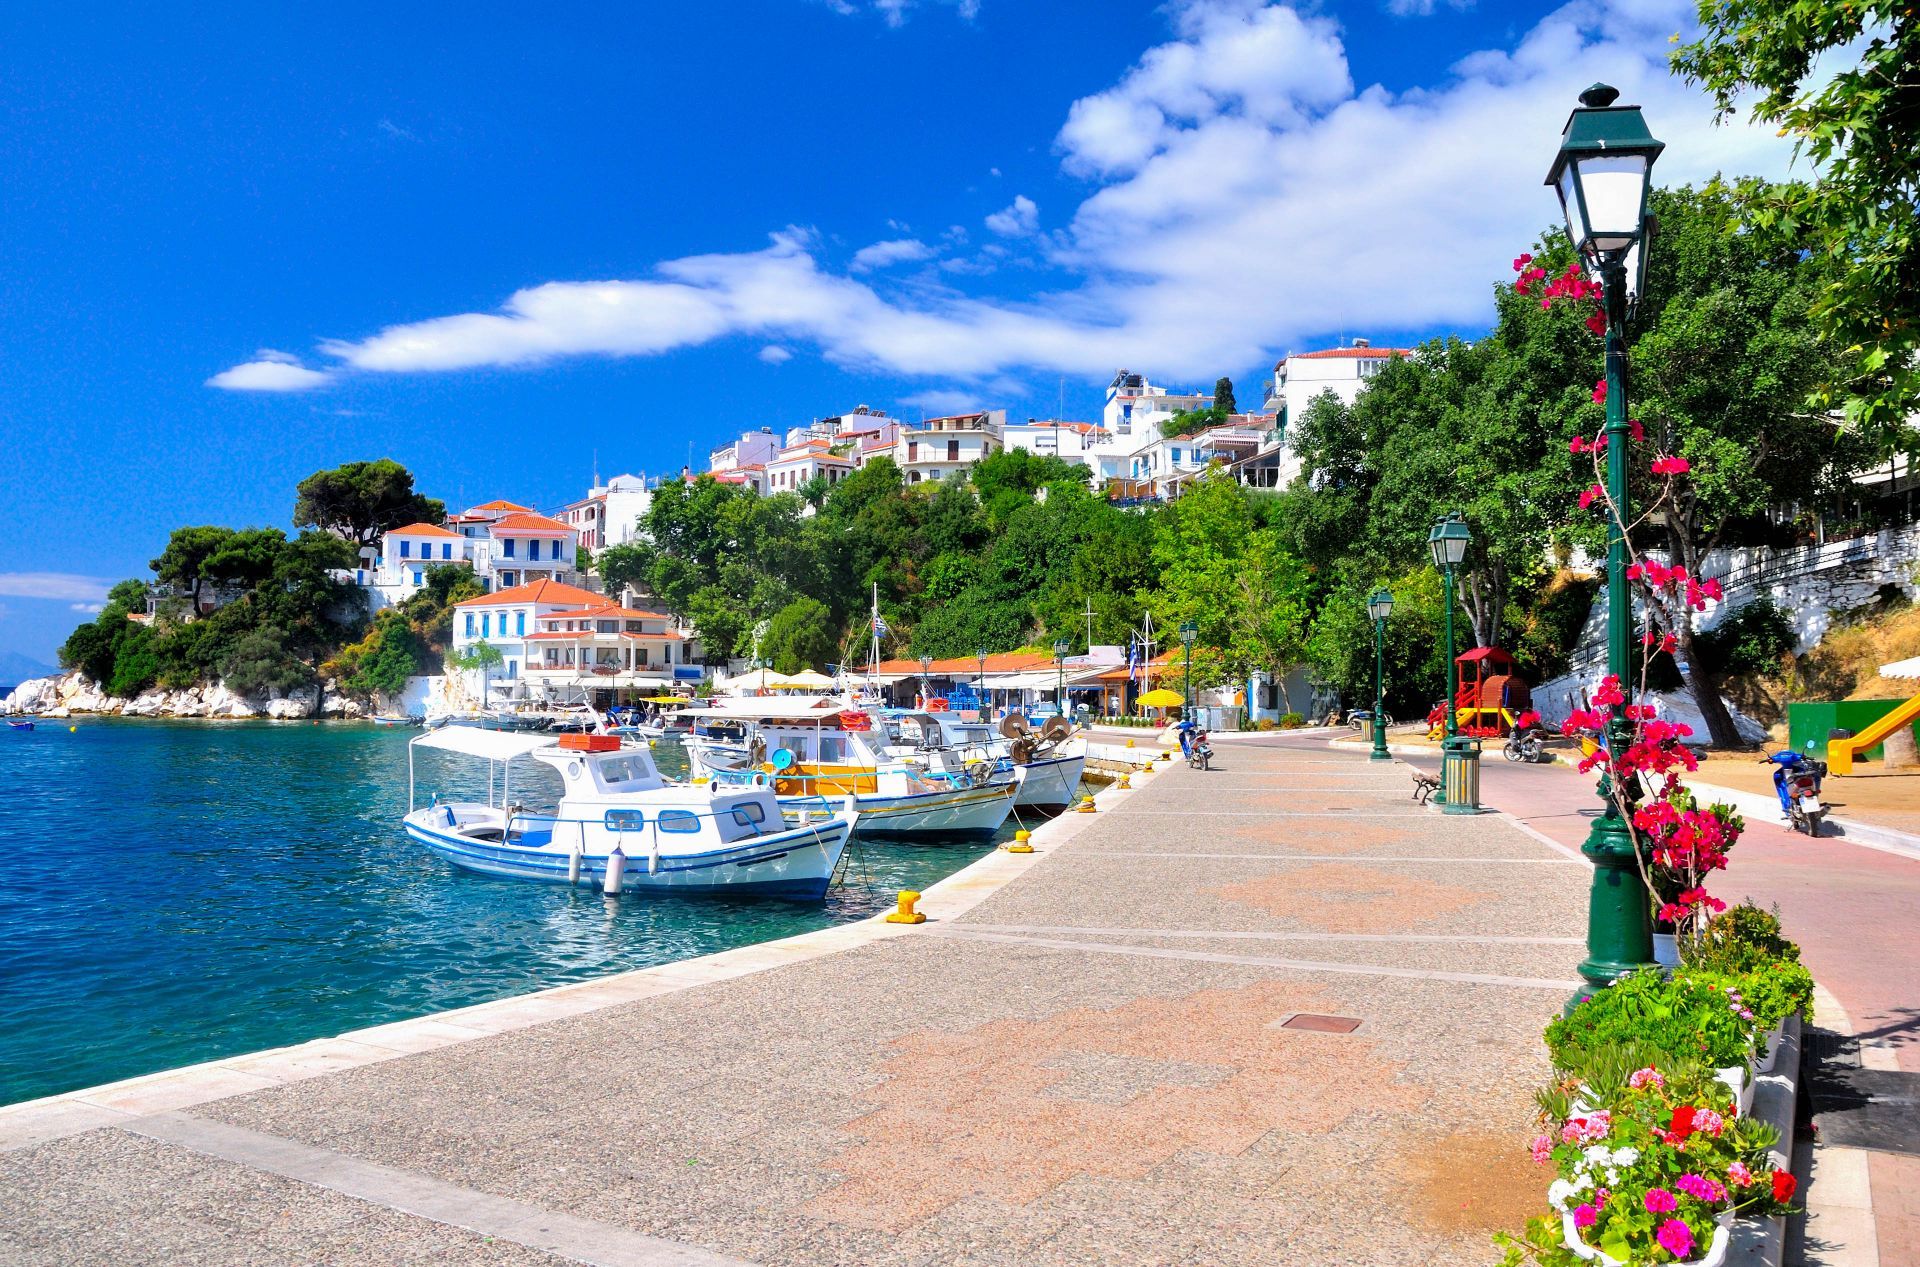 Sporades Greece: The main town of Skiathos island